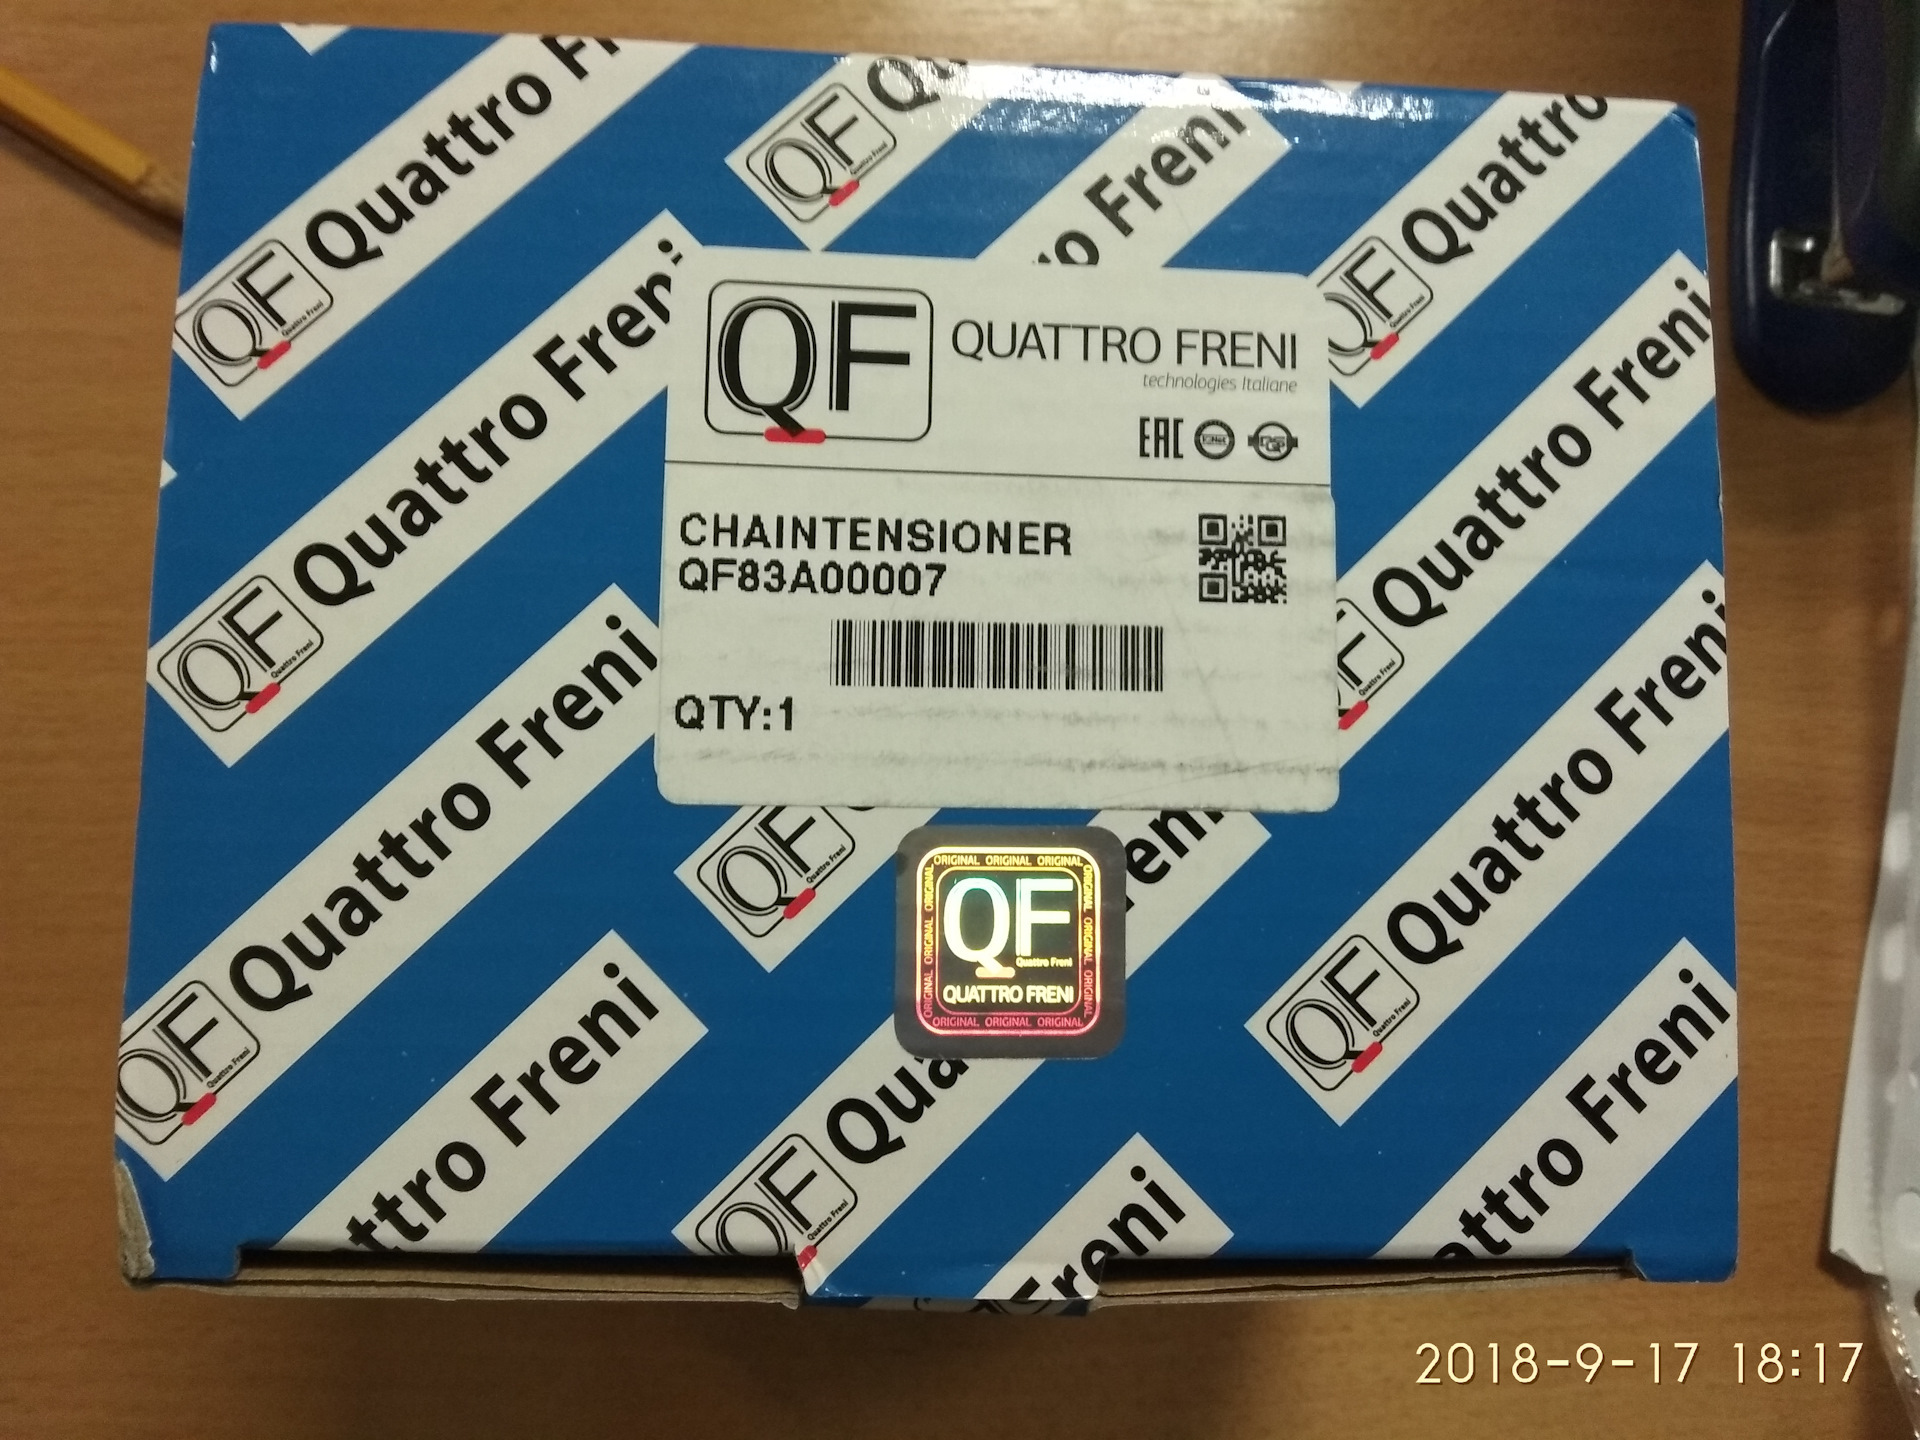 Freni страна производитель. Quattro freni детали упаковка. Quattro freni отзывы. Quattro freni логотип. Запчасти кватро Френи отзывы.